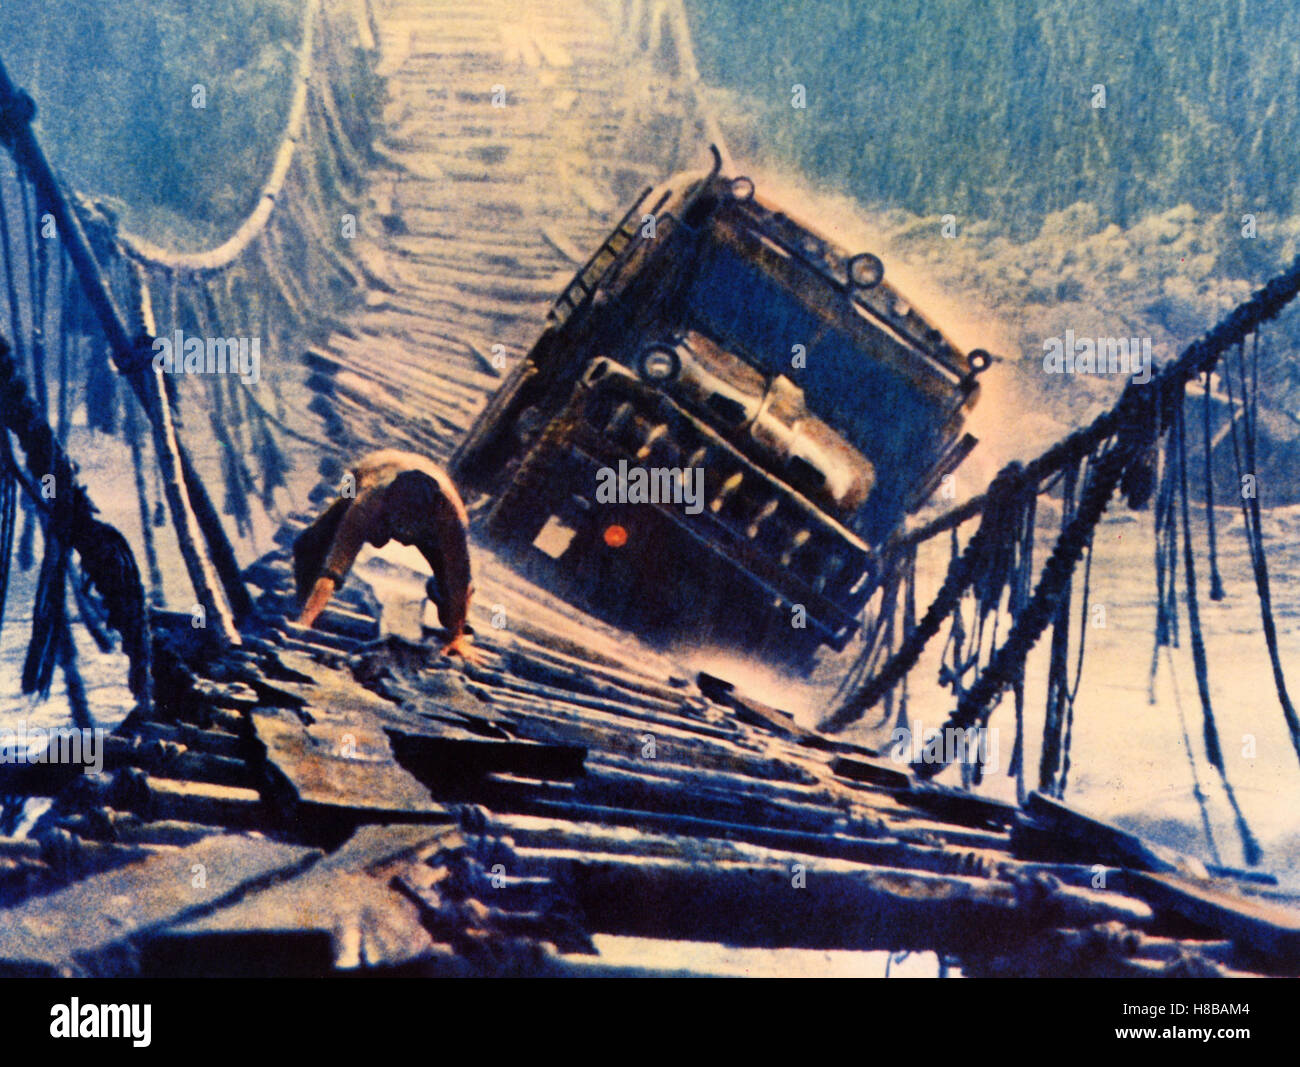 Atemlos vor Angst, (THE SORCERER) USA 1976, Regie: William Friedkin, Szene, Key: Lastwagen, Hängebrücke, Katastrophe, Stock Photo